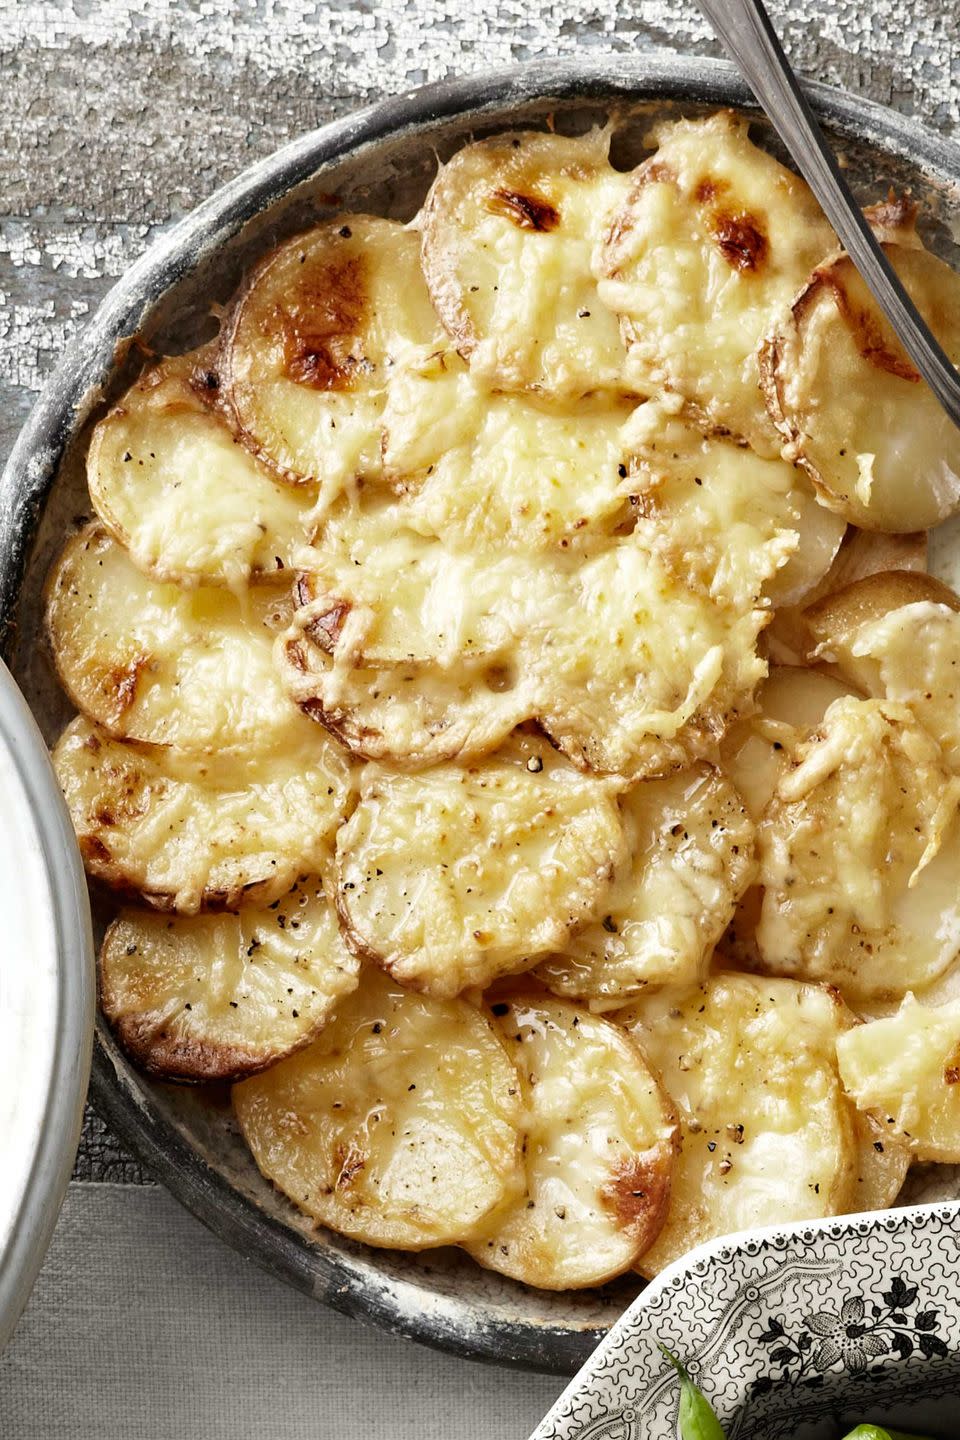 40) Potato and Celery-Root Gratin